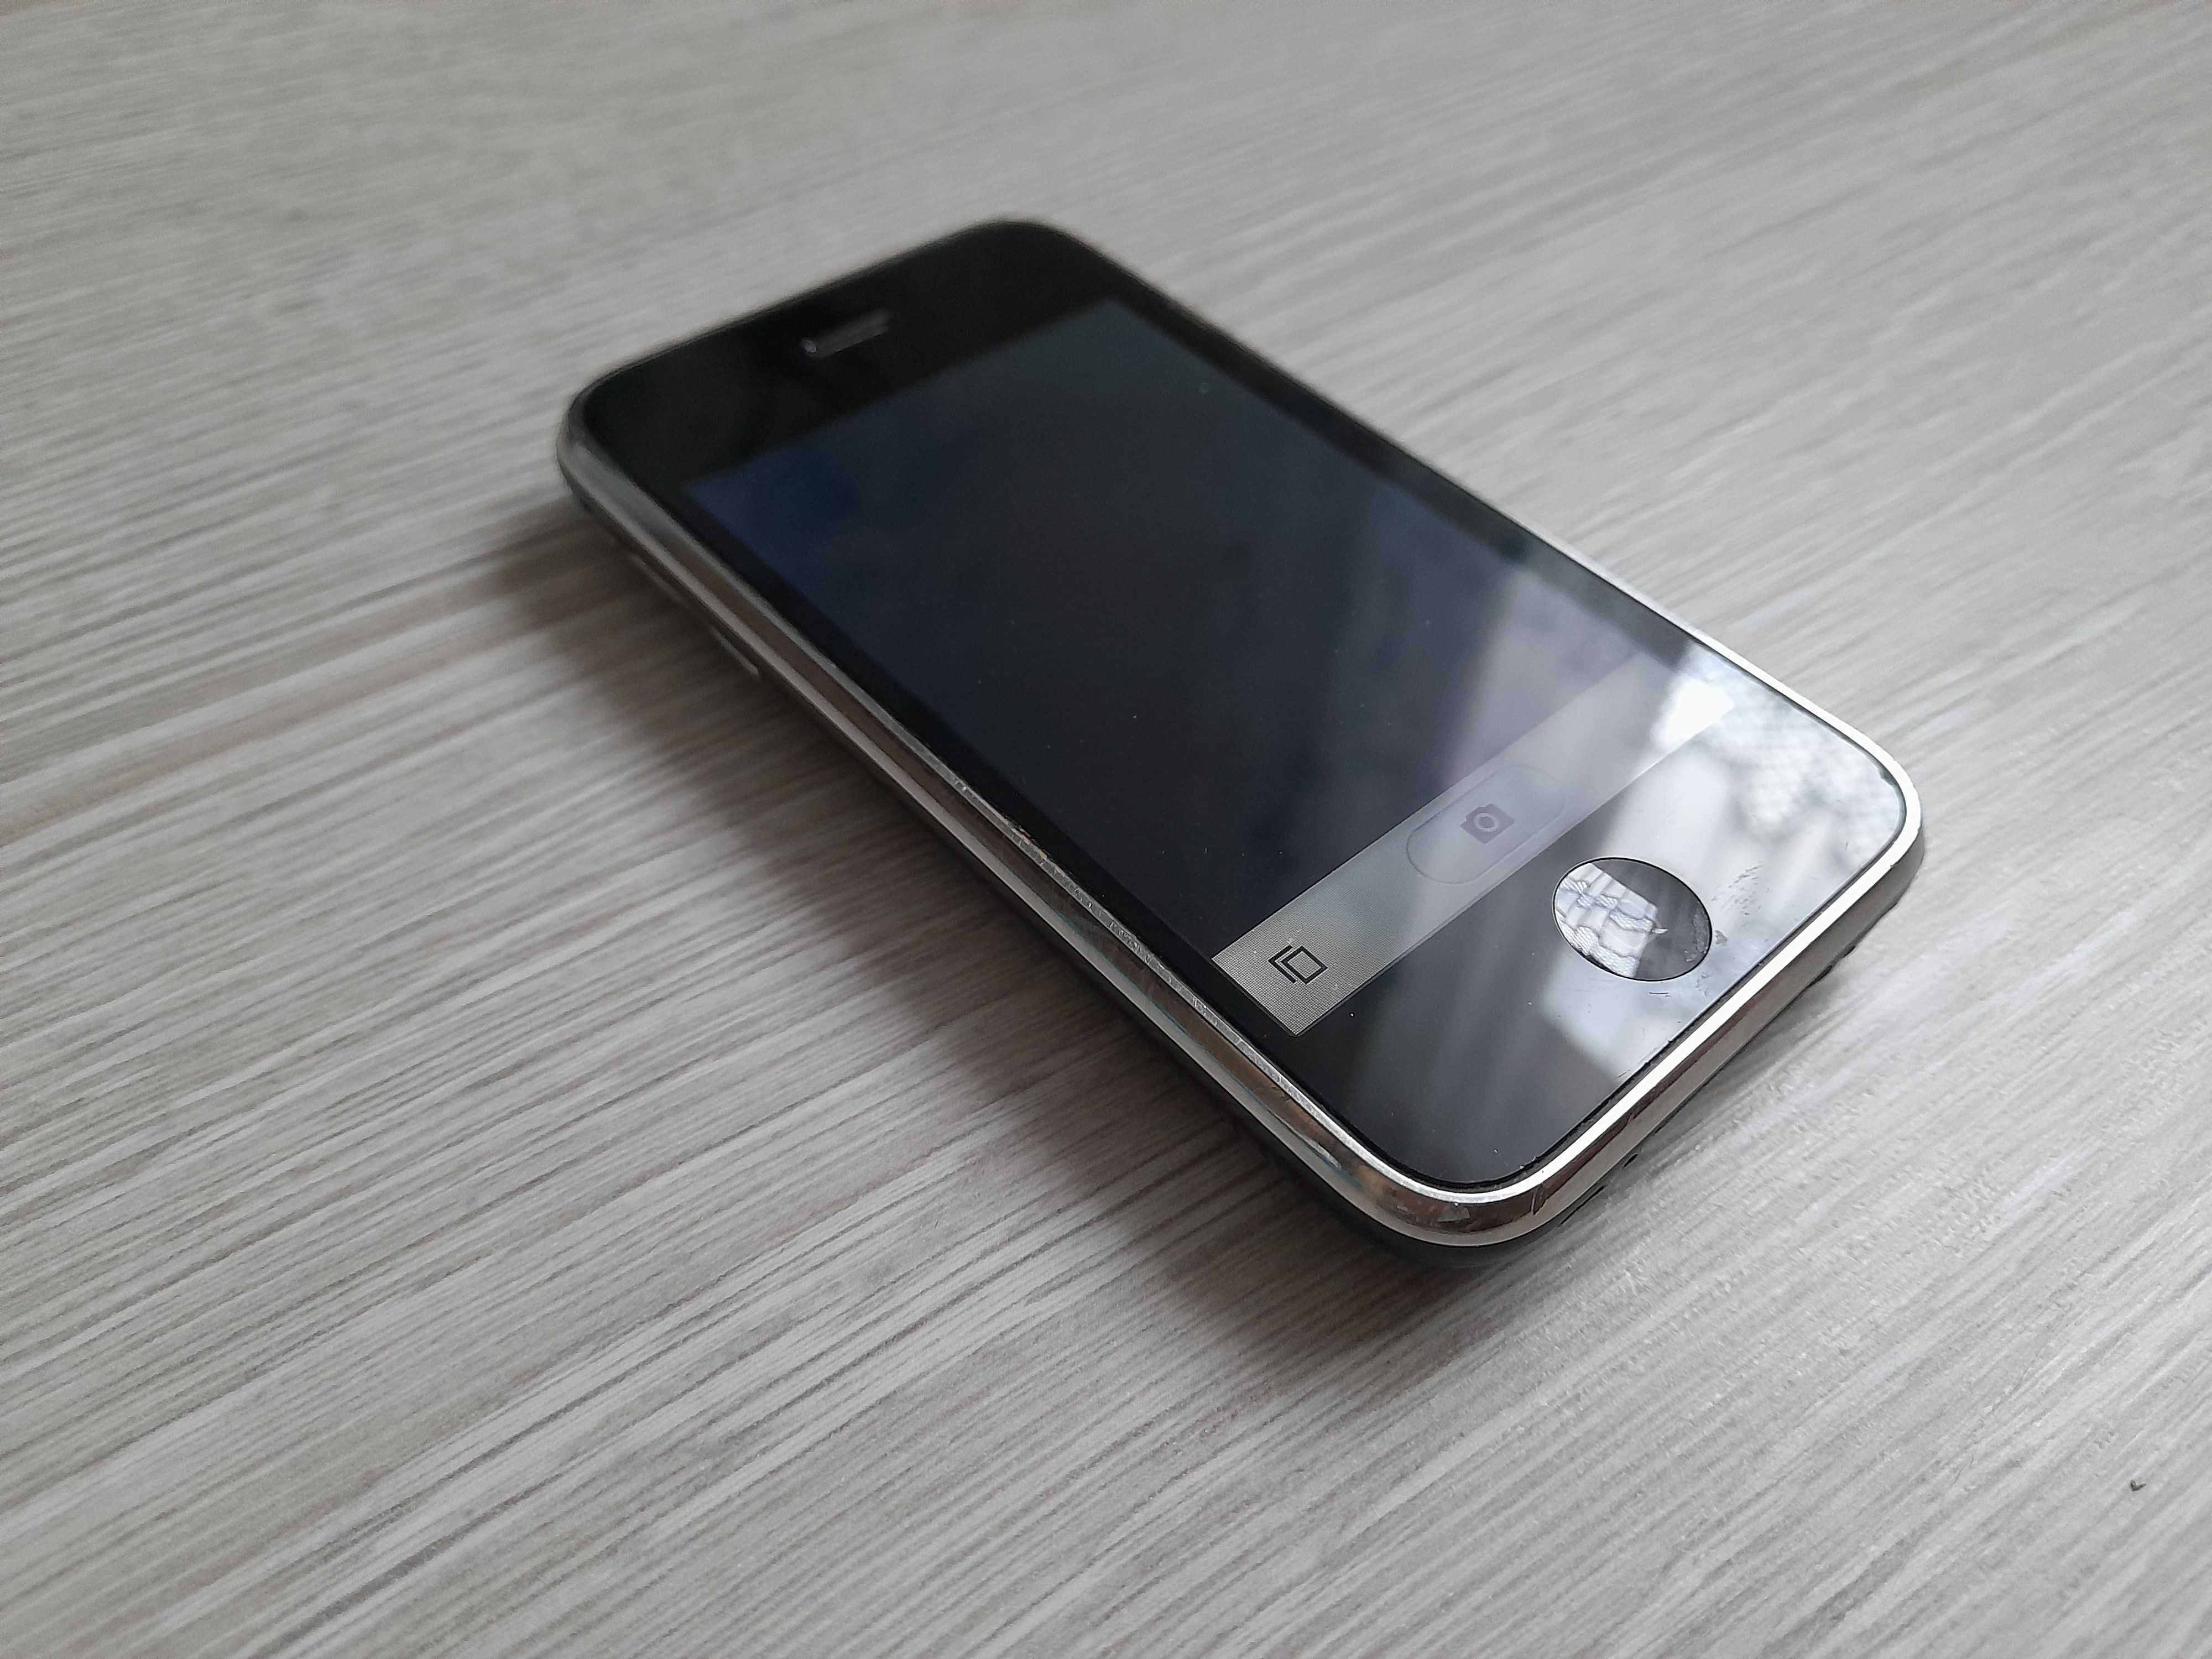 Oryginalny telefon APPLE A1241 8GB Iphone sprawny